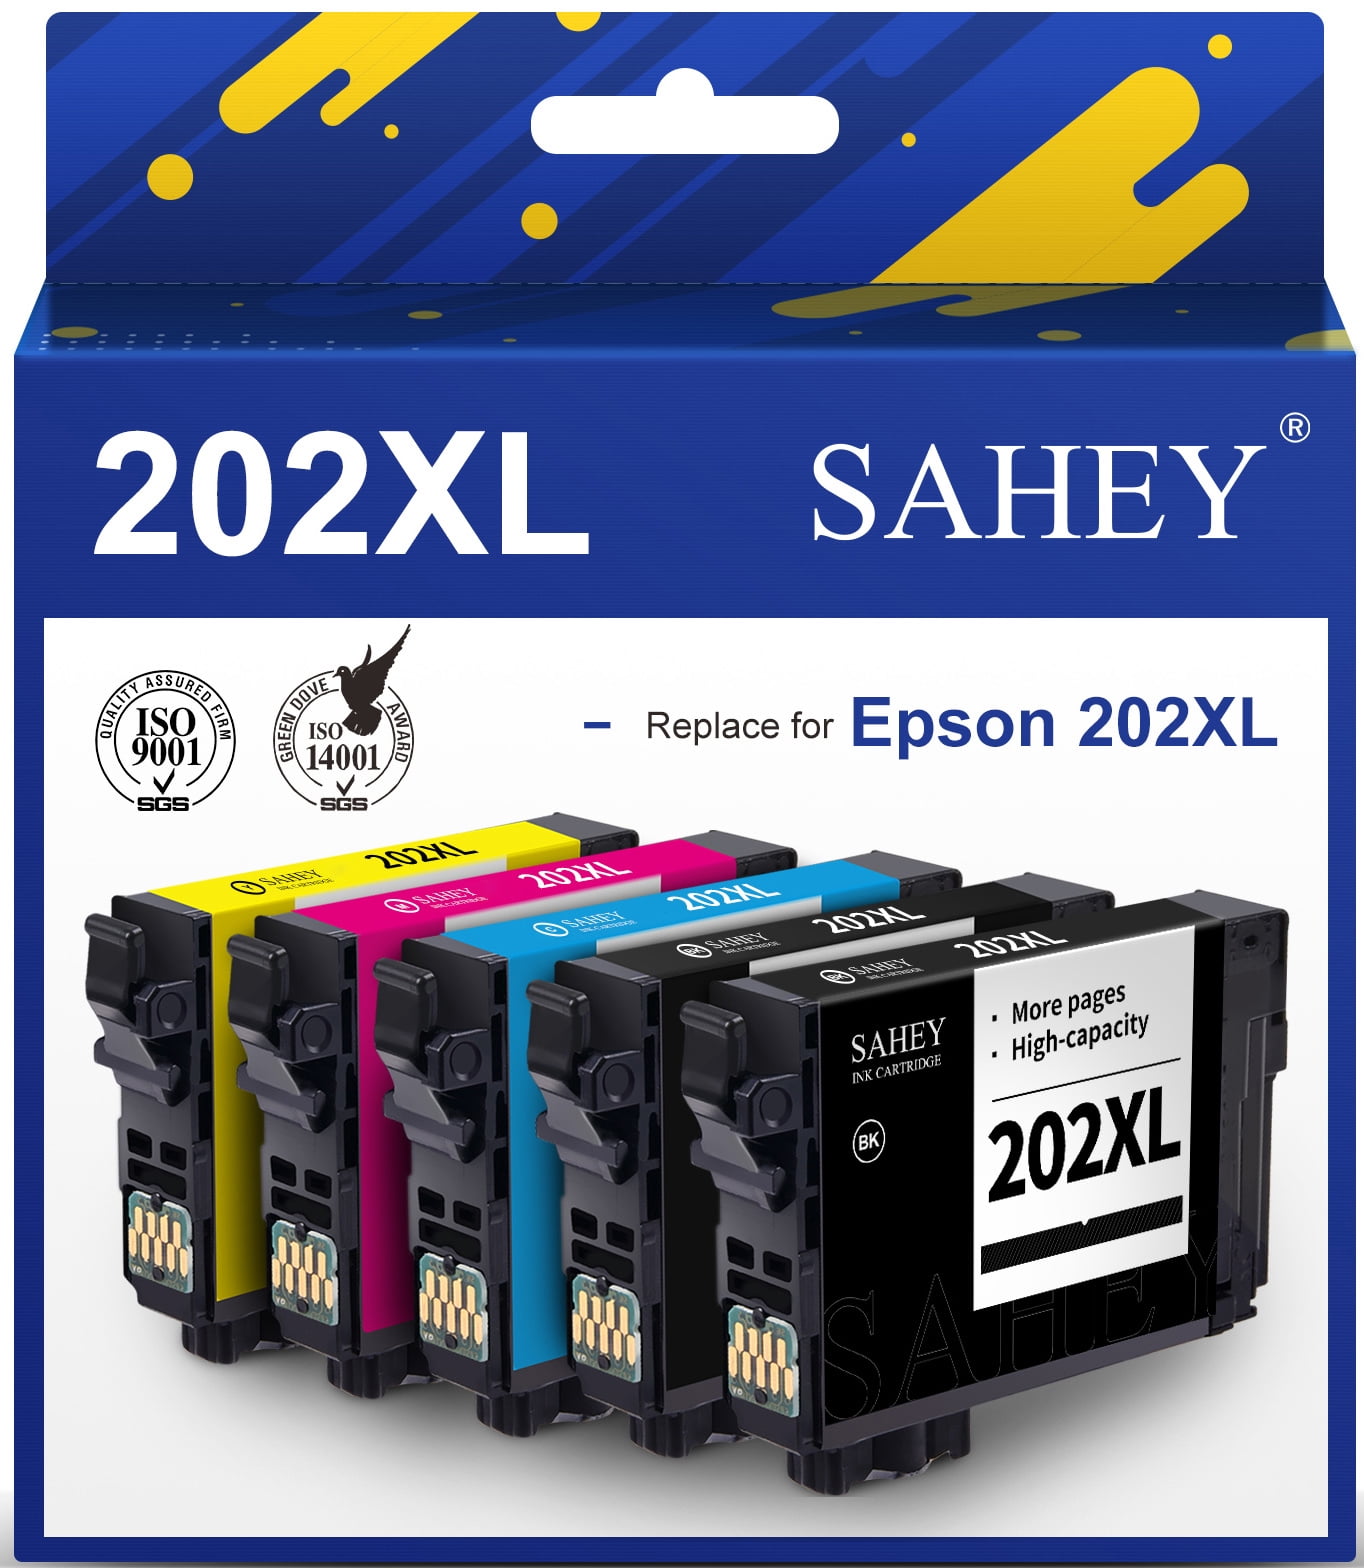 Maori tage Og 202XL Ink Cartridge for Epson XP-5100 WF-2860 Printer (2 Black, 1 Cyan, 1  Magenta, 1 Yellow, 5 Pack) - Walmart.com